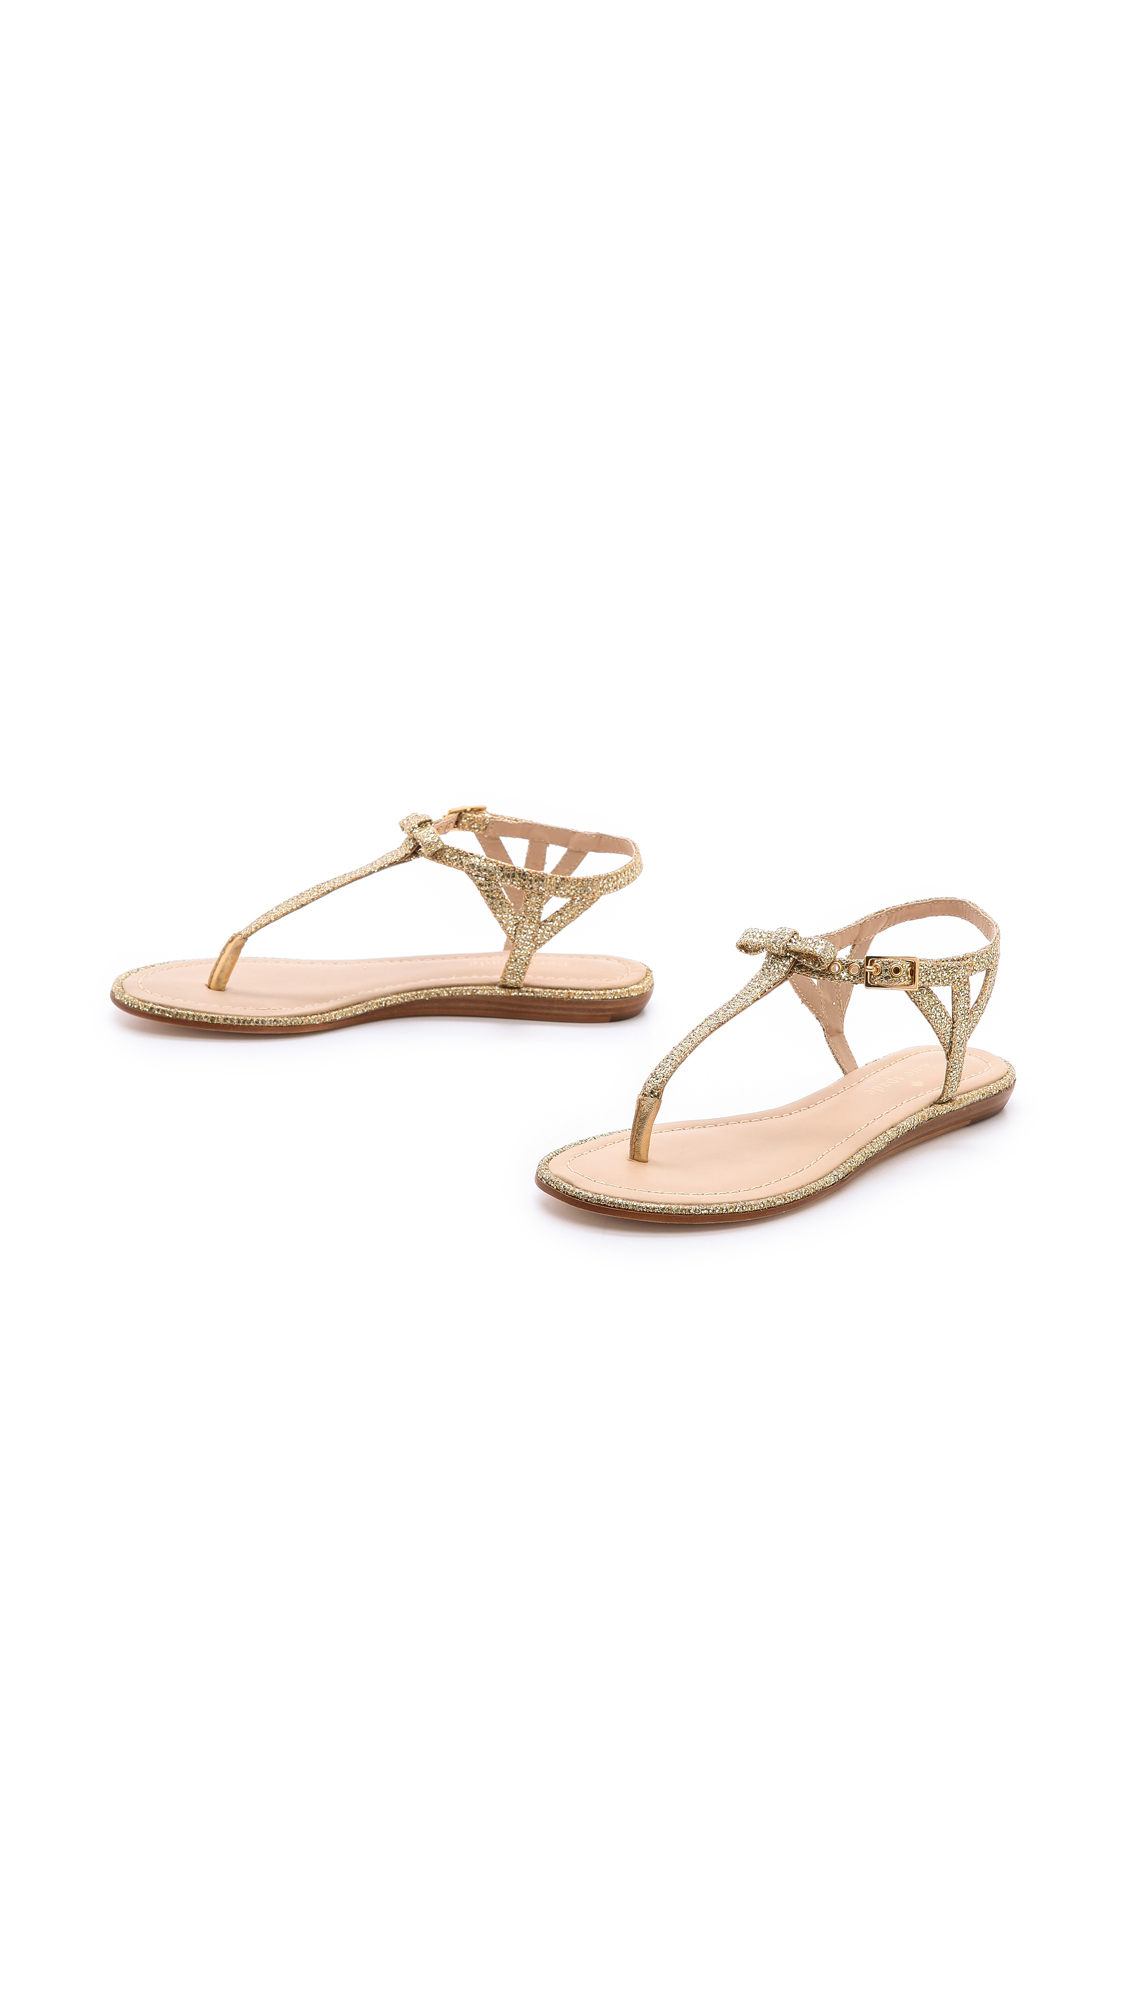 Kate Spade Andrea Metallic Flat Sandals Gold - Lyst